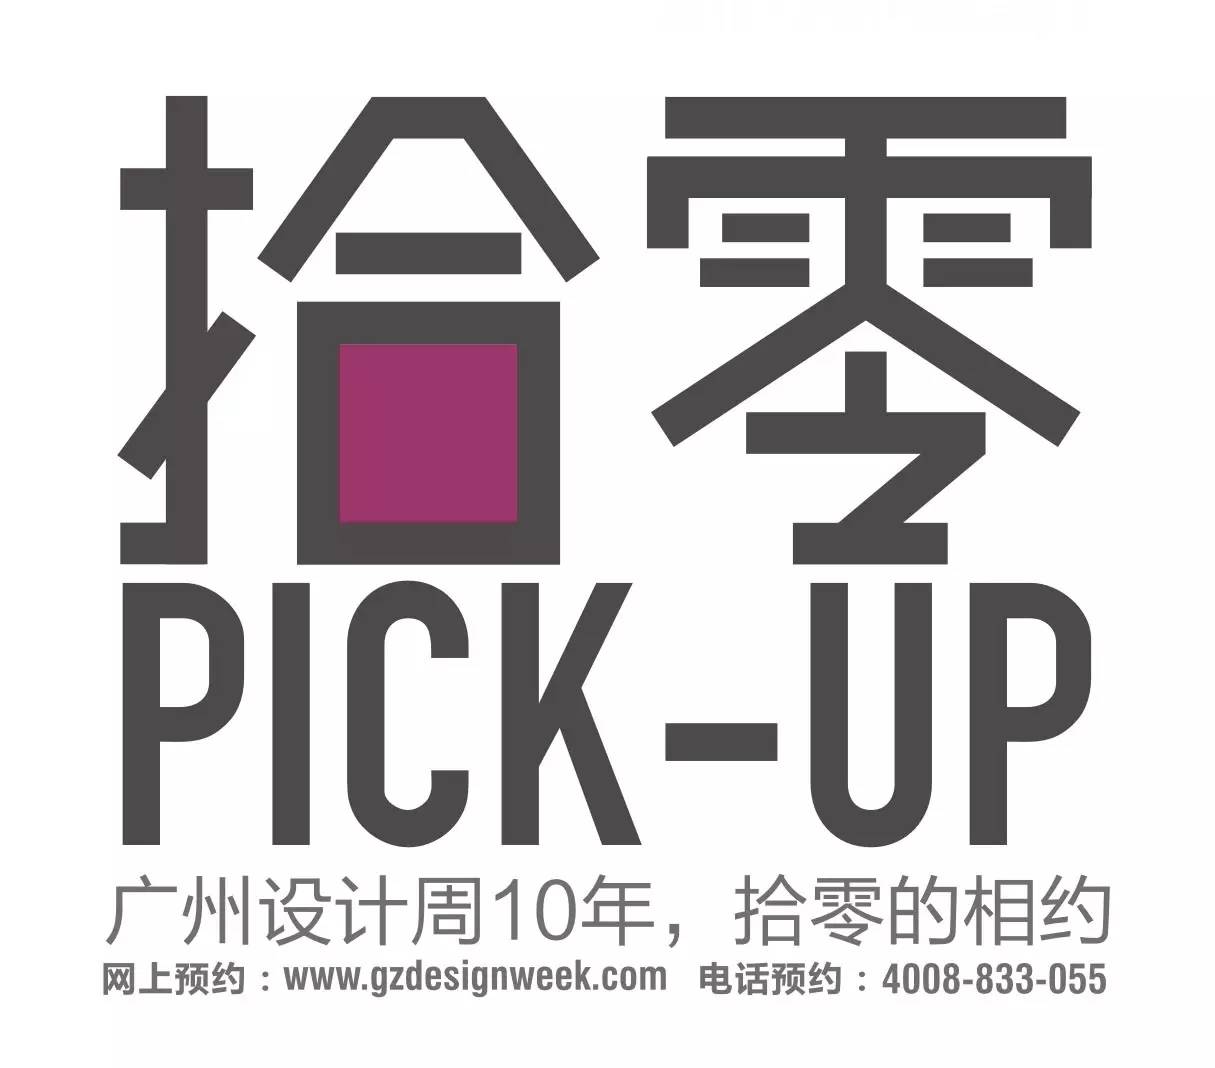 HOPO華鵬陶瓷與您相約2015廣州國(guó)際設計周！